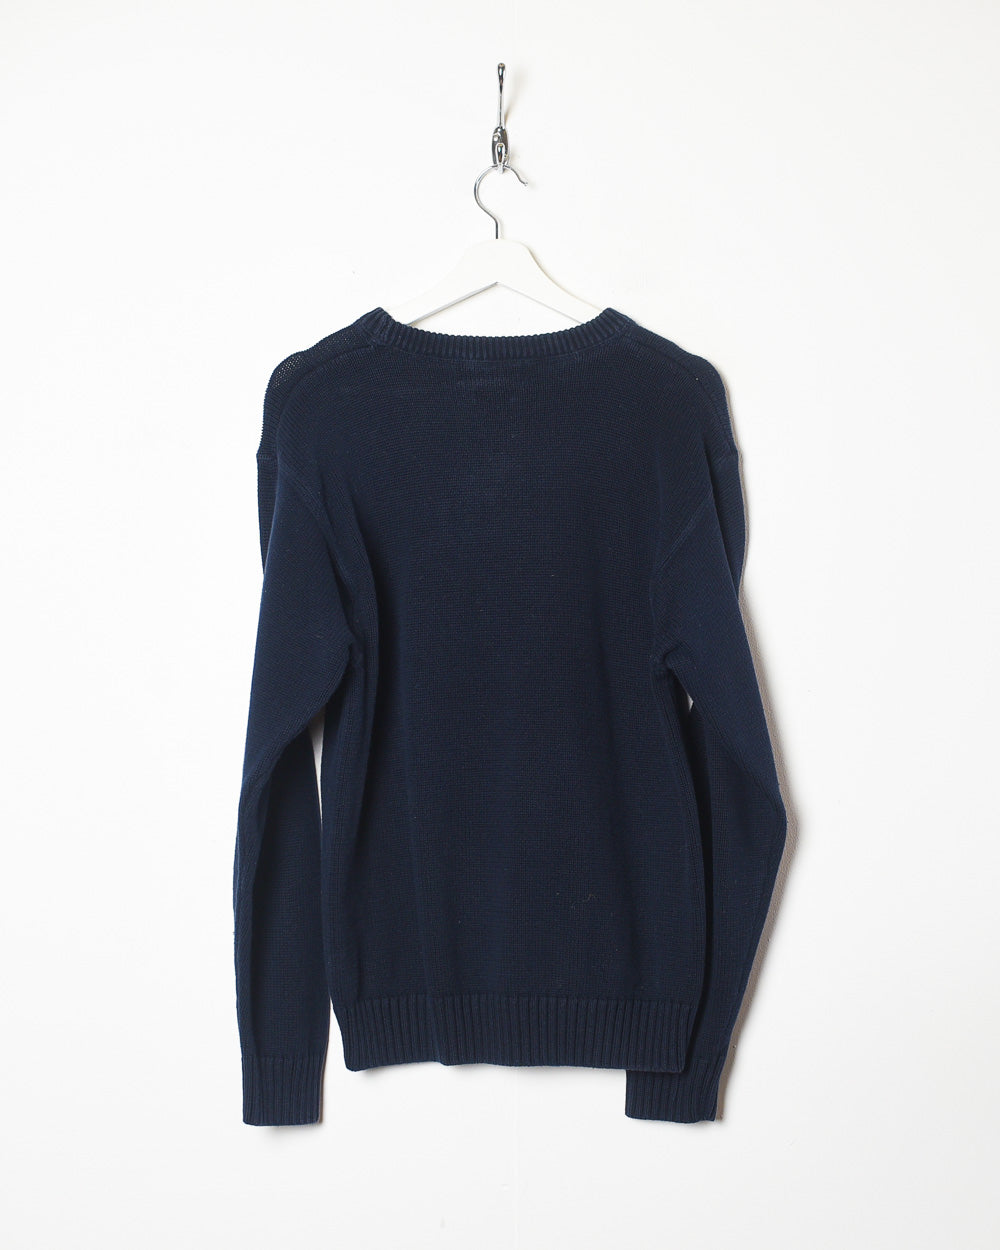 Navy Ralph Lauren Knitted Sweatshirt - Medium